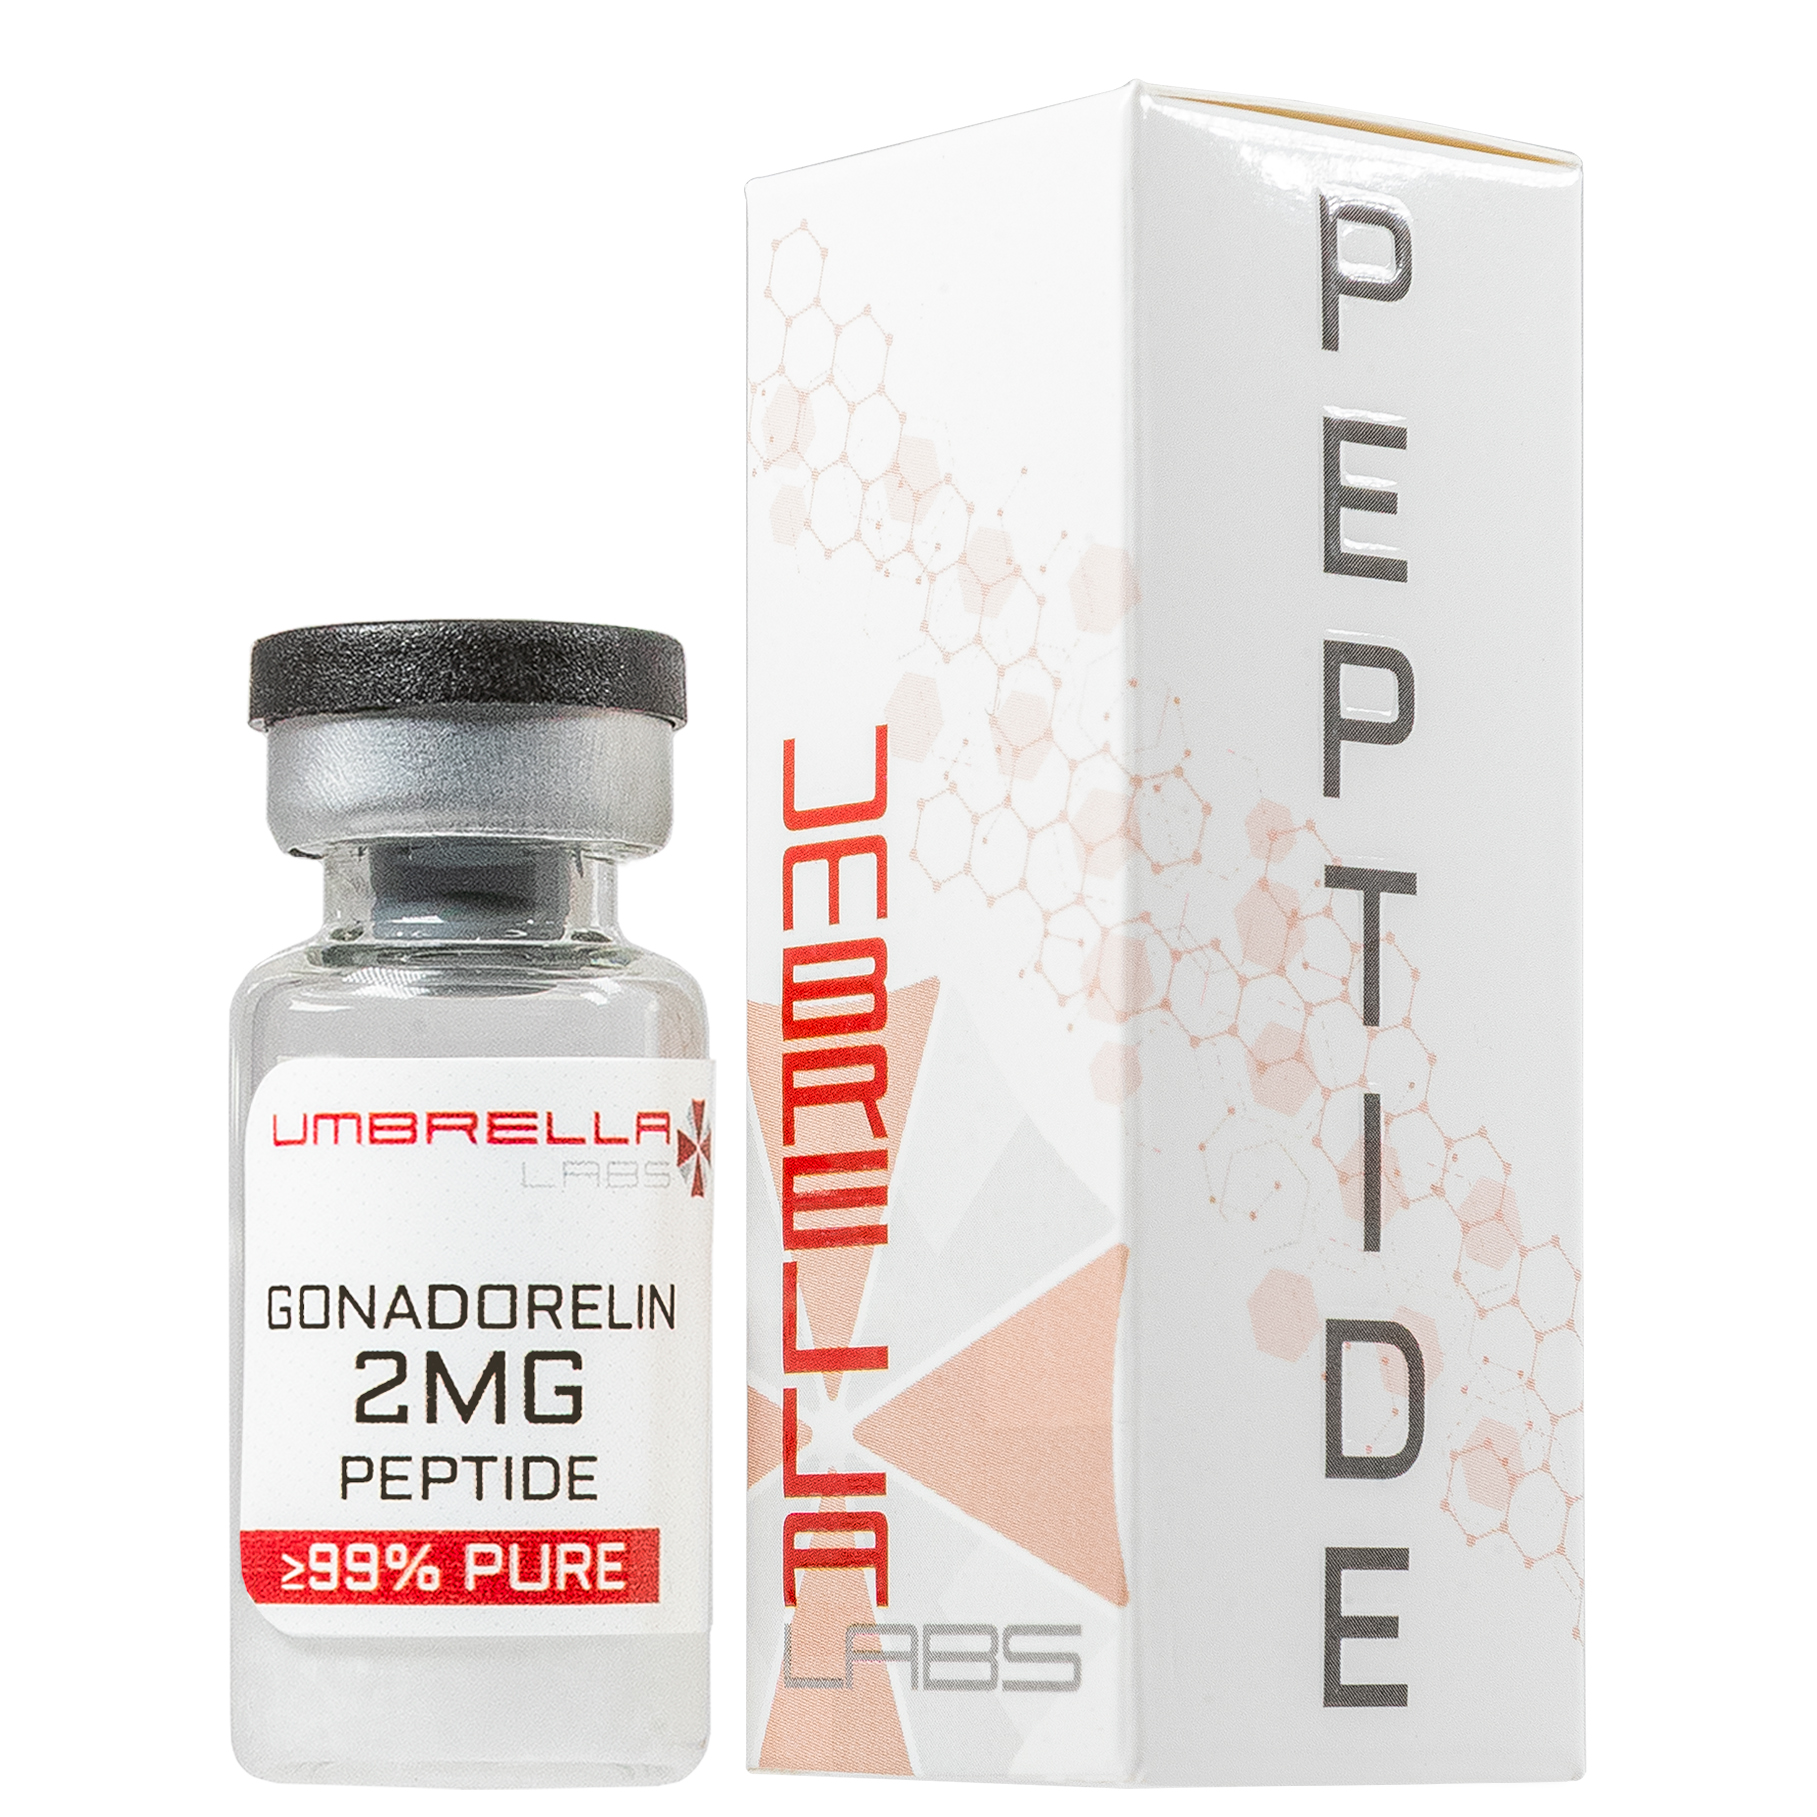 gonadorelin peptide